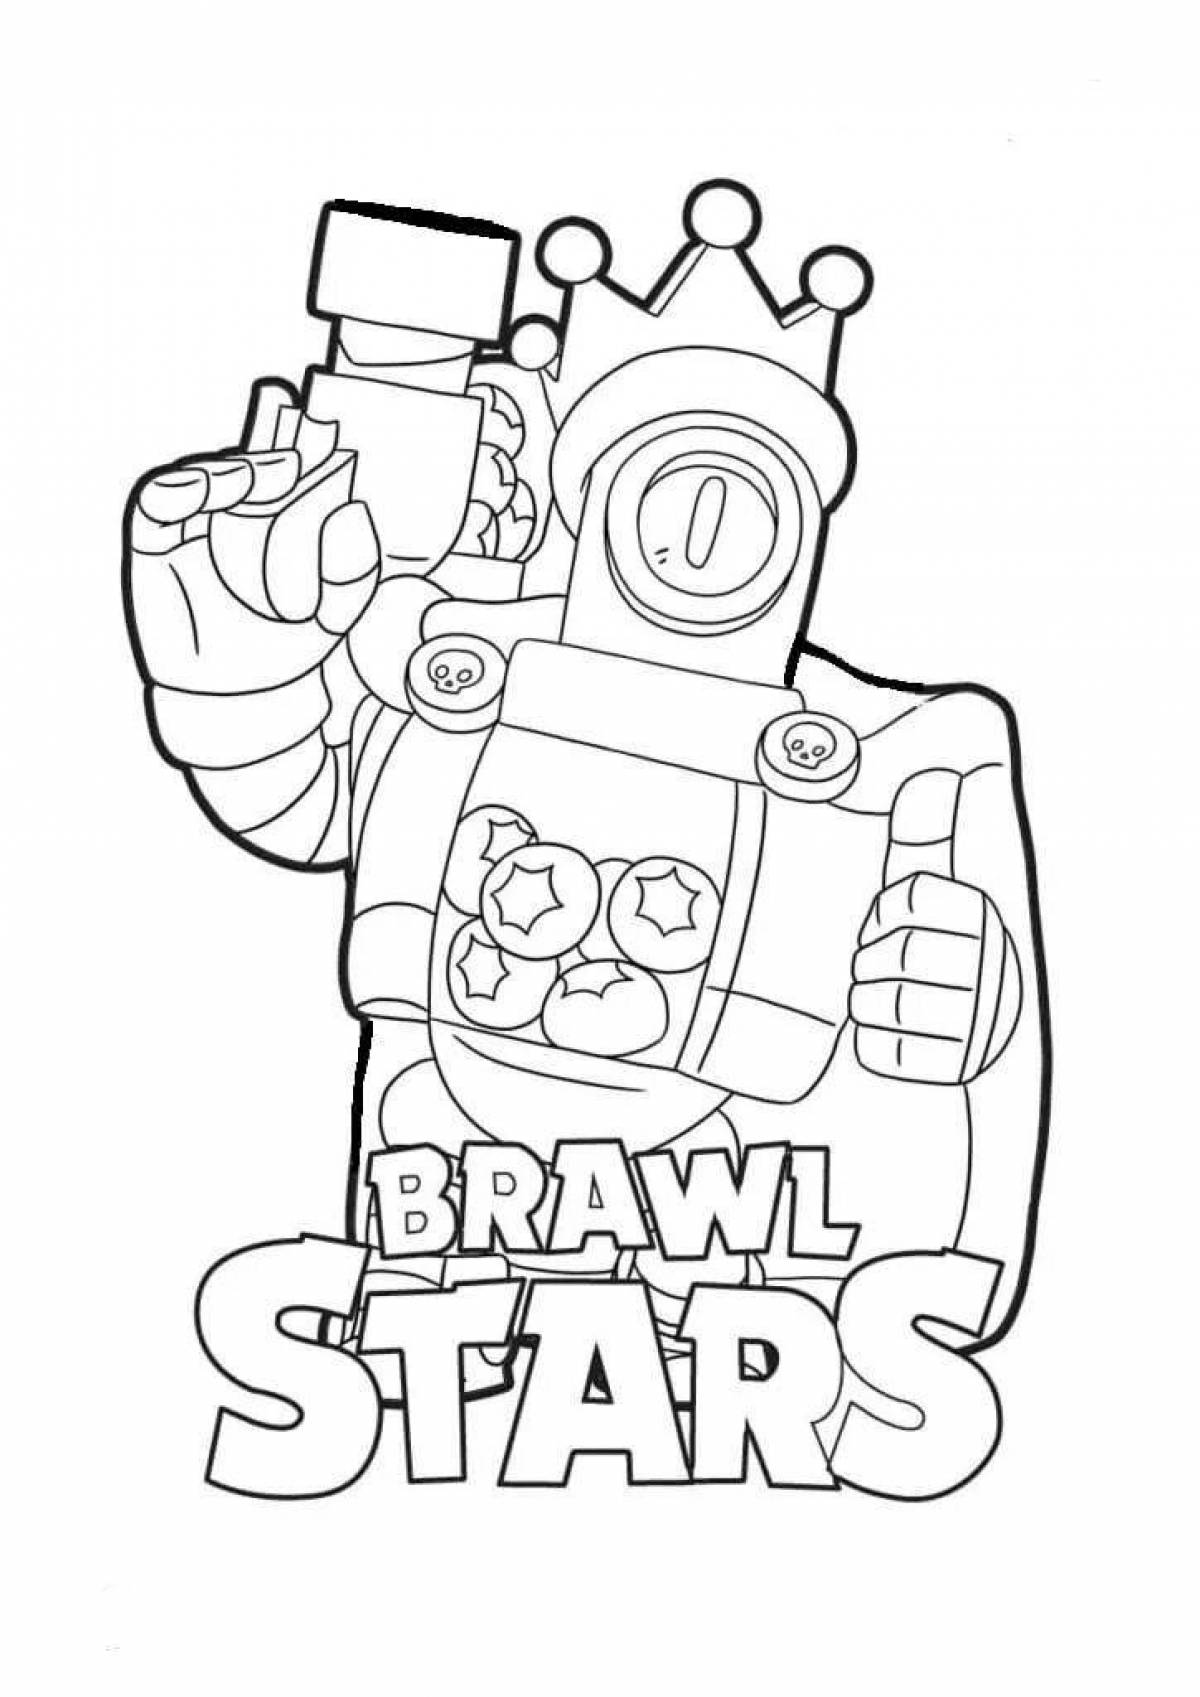 Bravo stars creative coloring book for kids